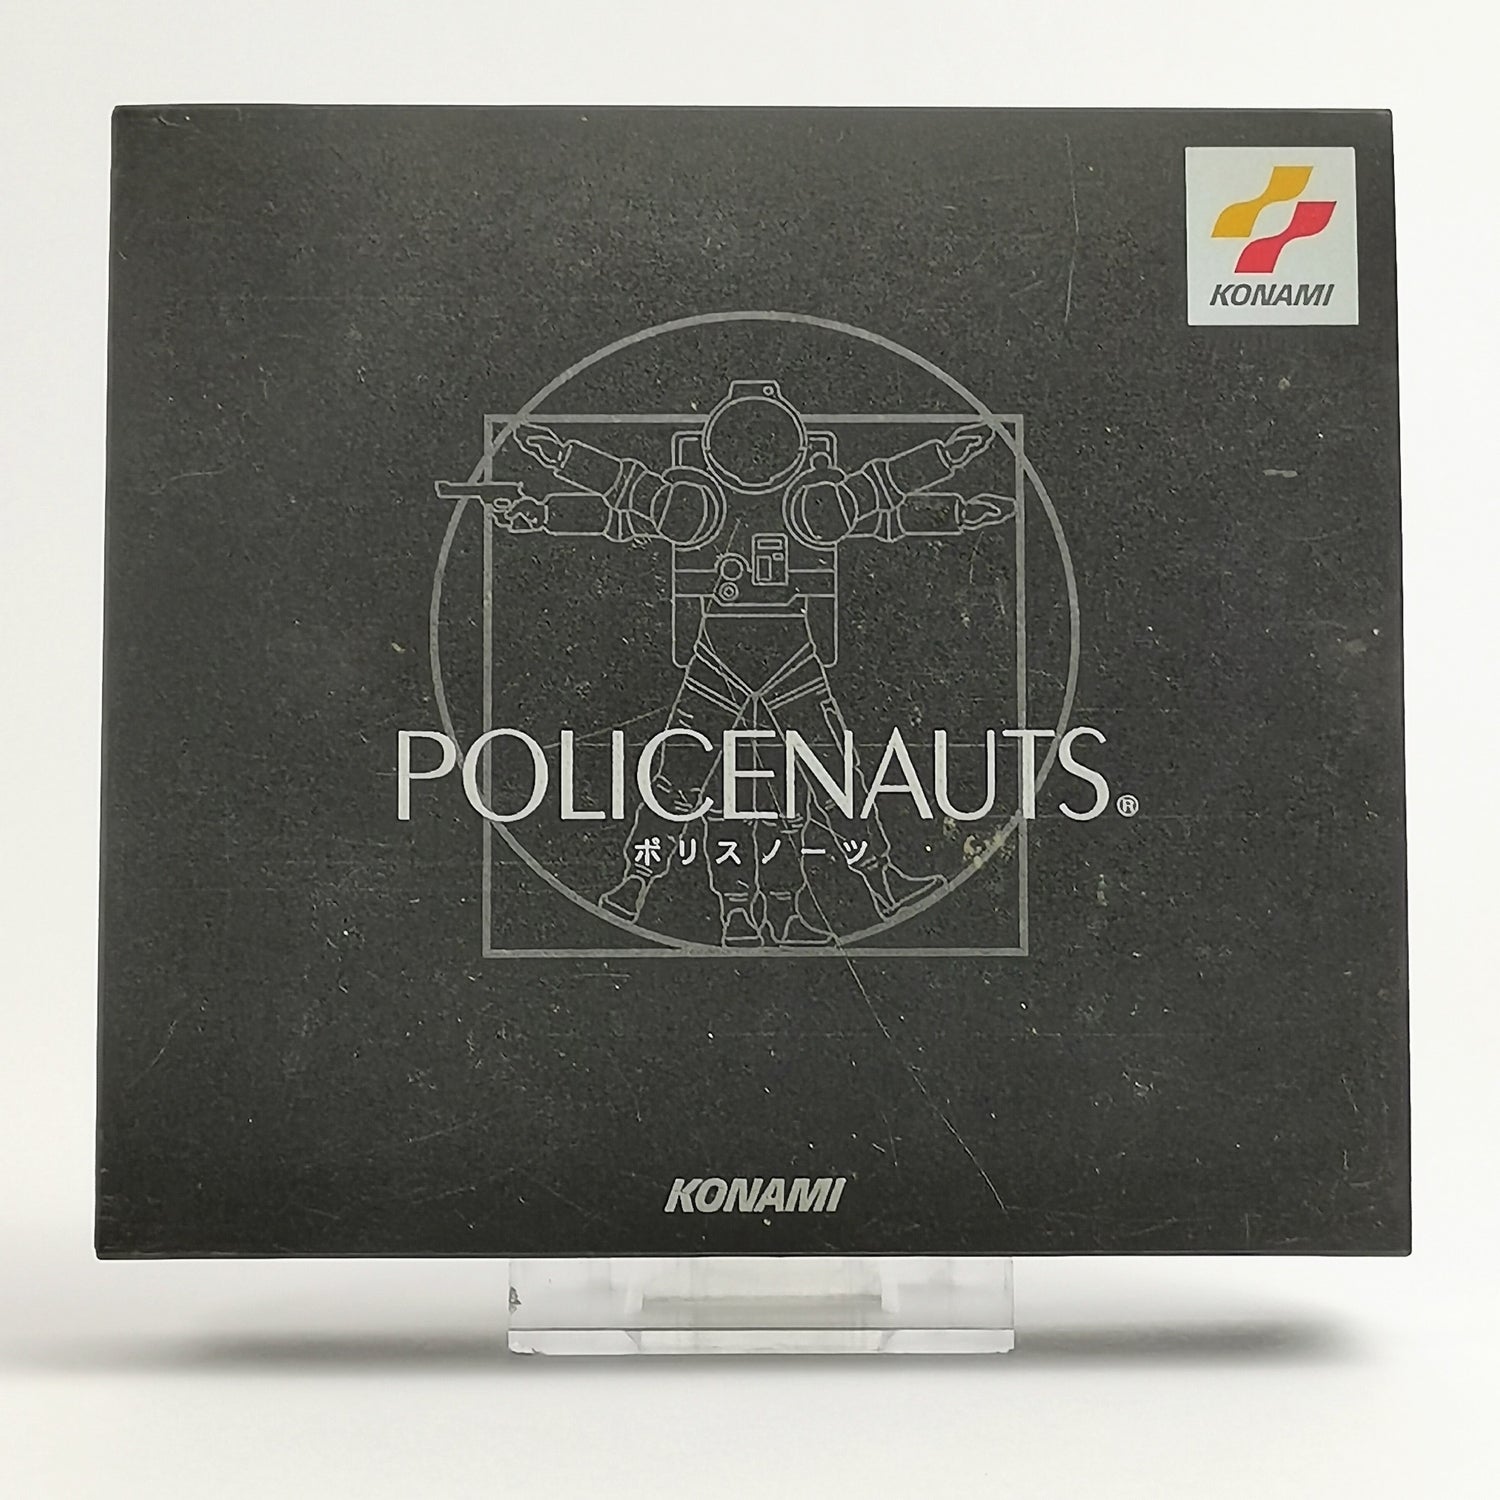 Sega Saturn Game: Policenauts - Konami | NTSC-J JAPAN version - original packaging